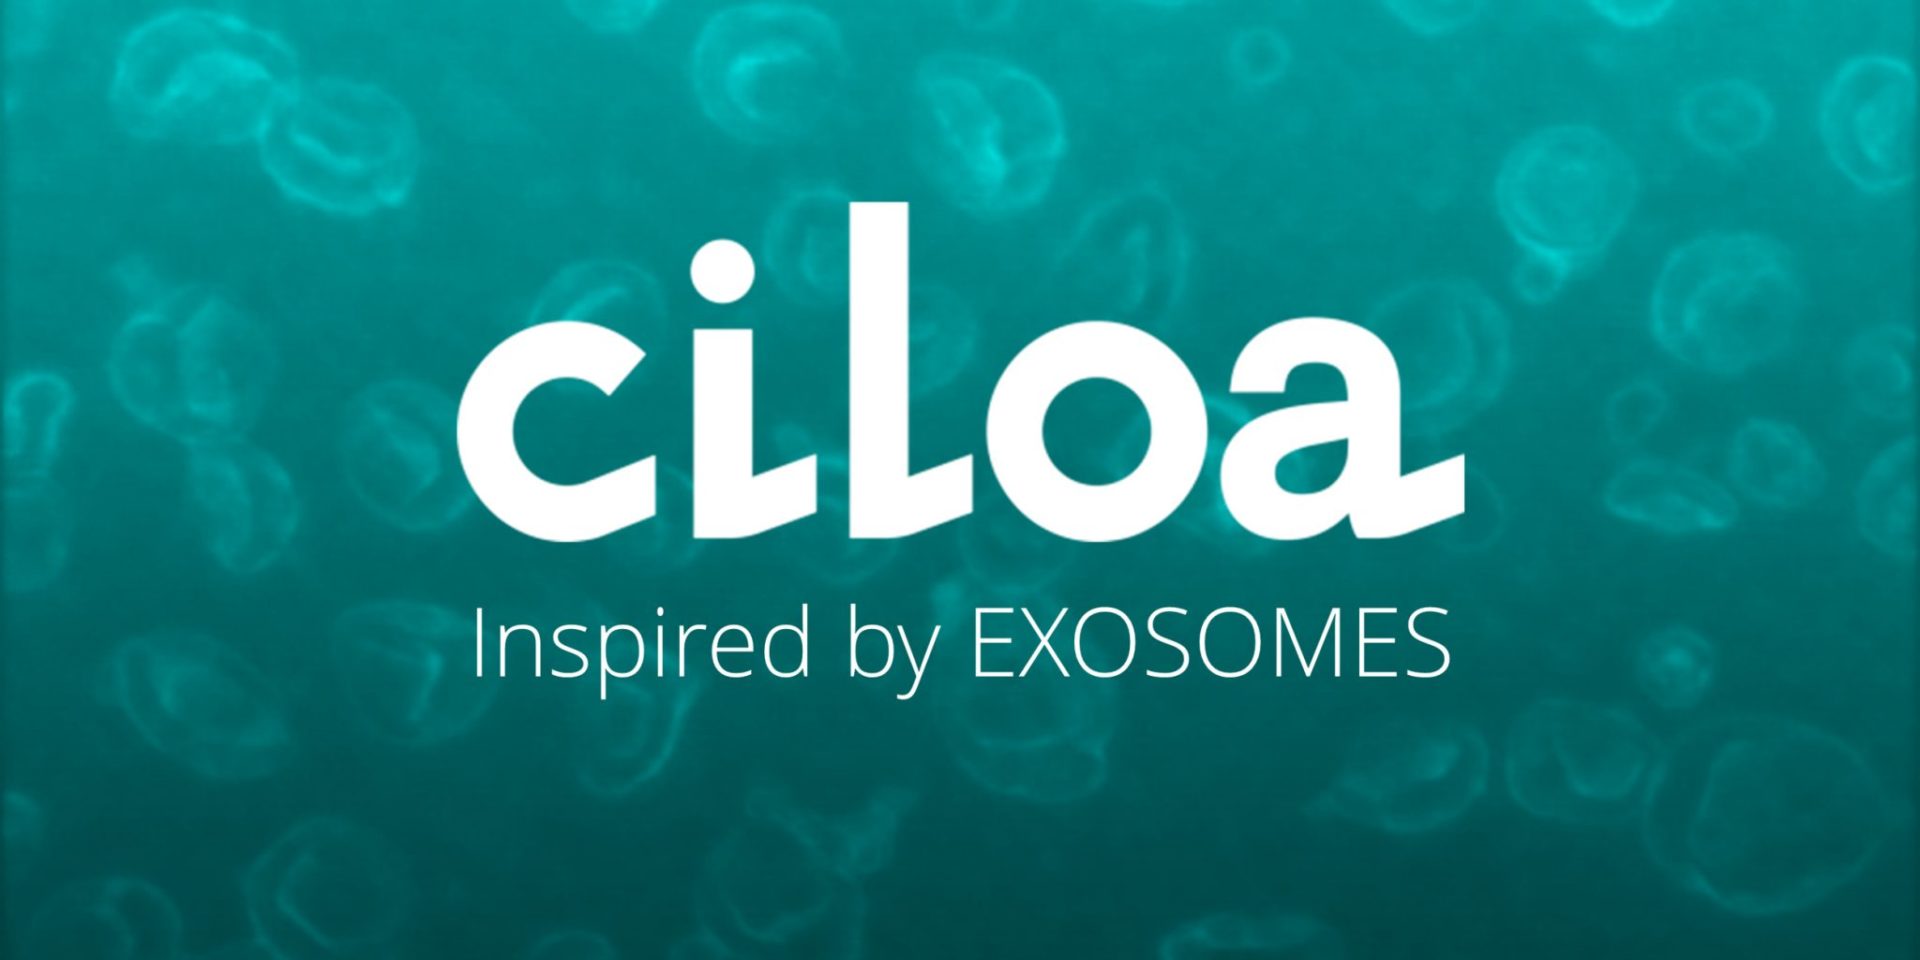 Ciloa exosomes